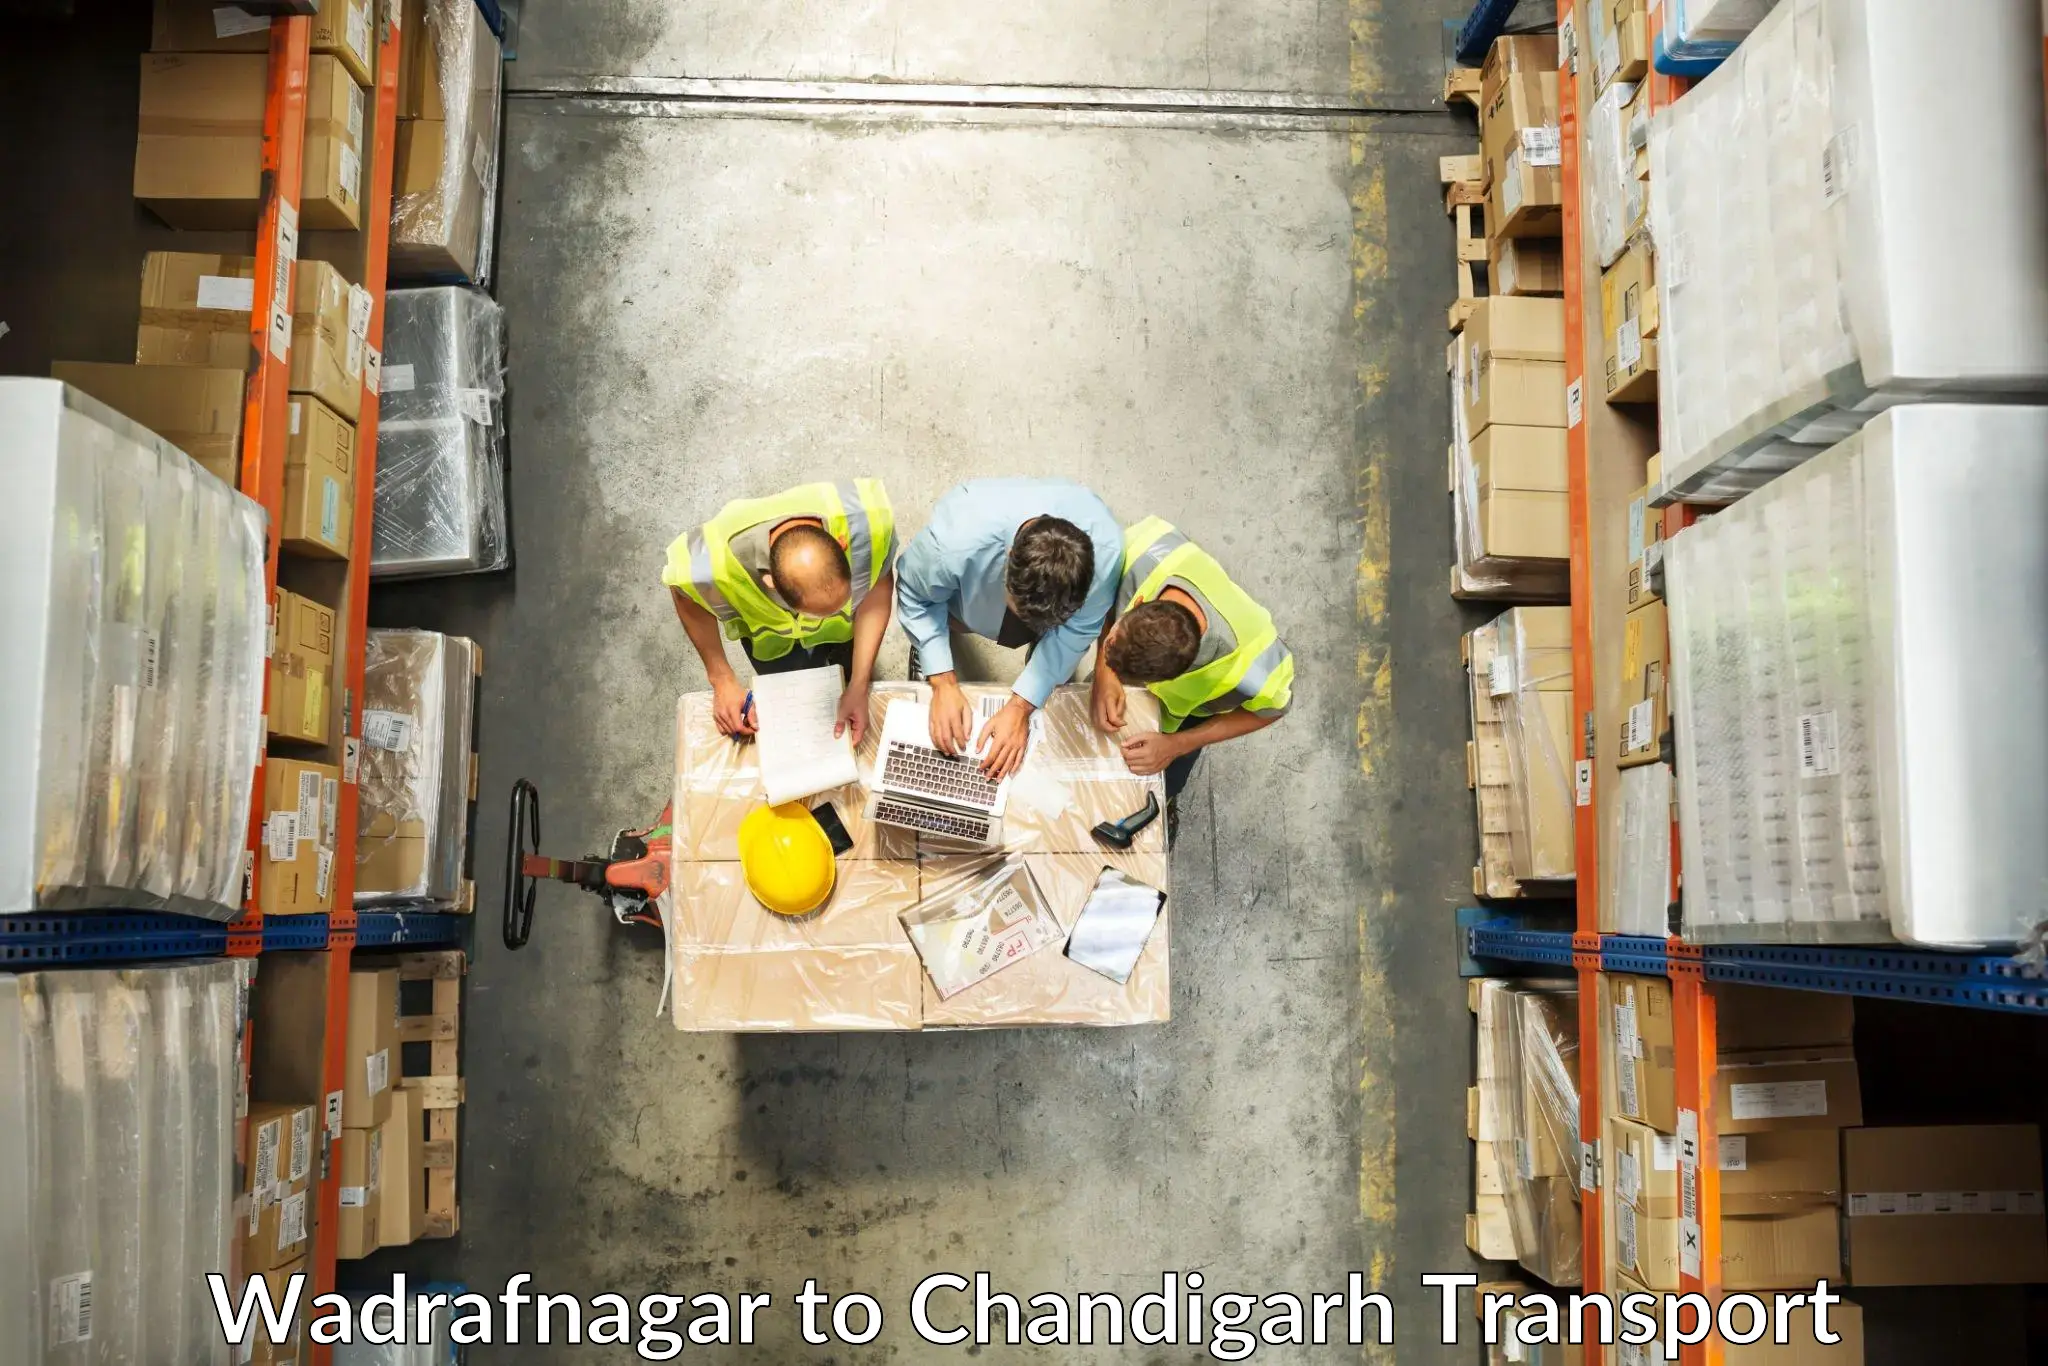 Commercial transport service Wadrafnagar to Chandigarh